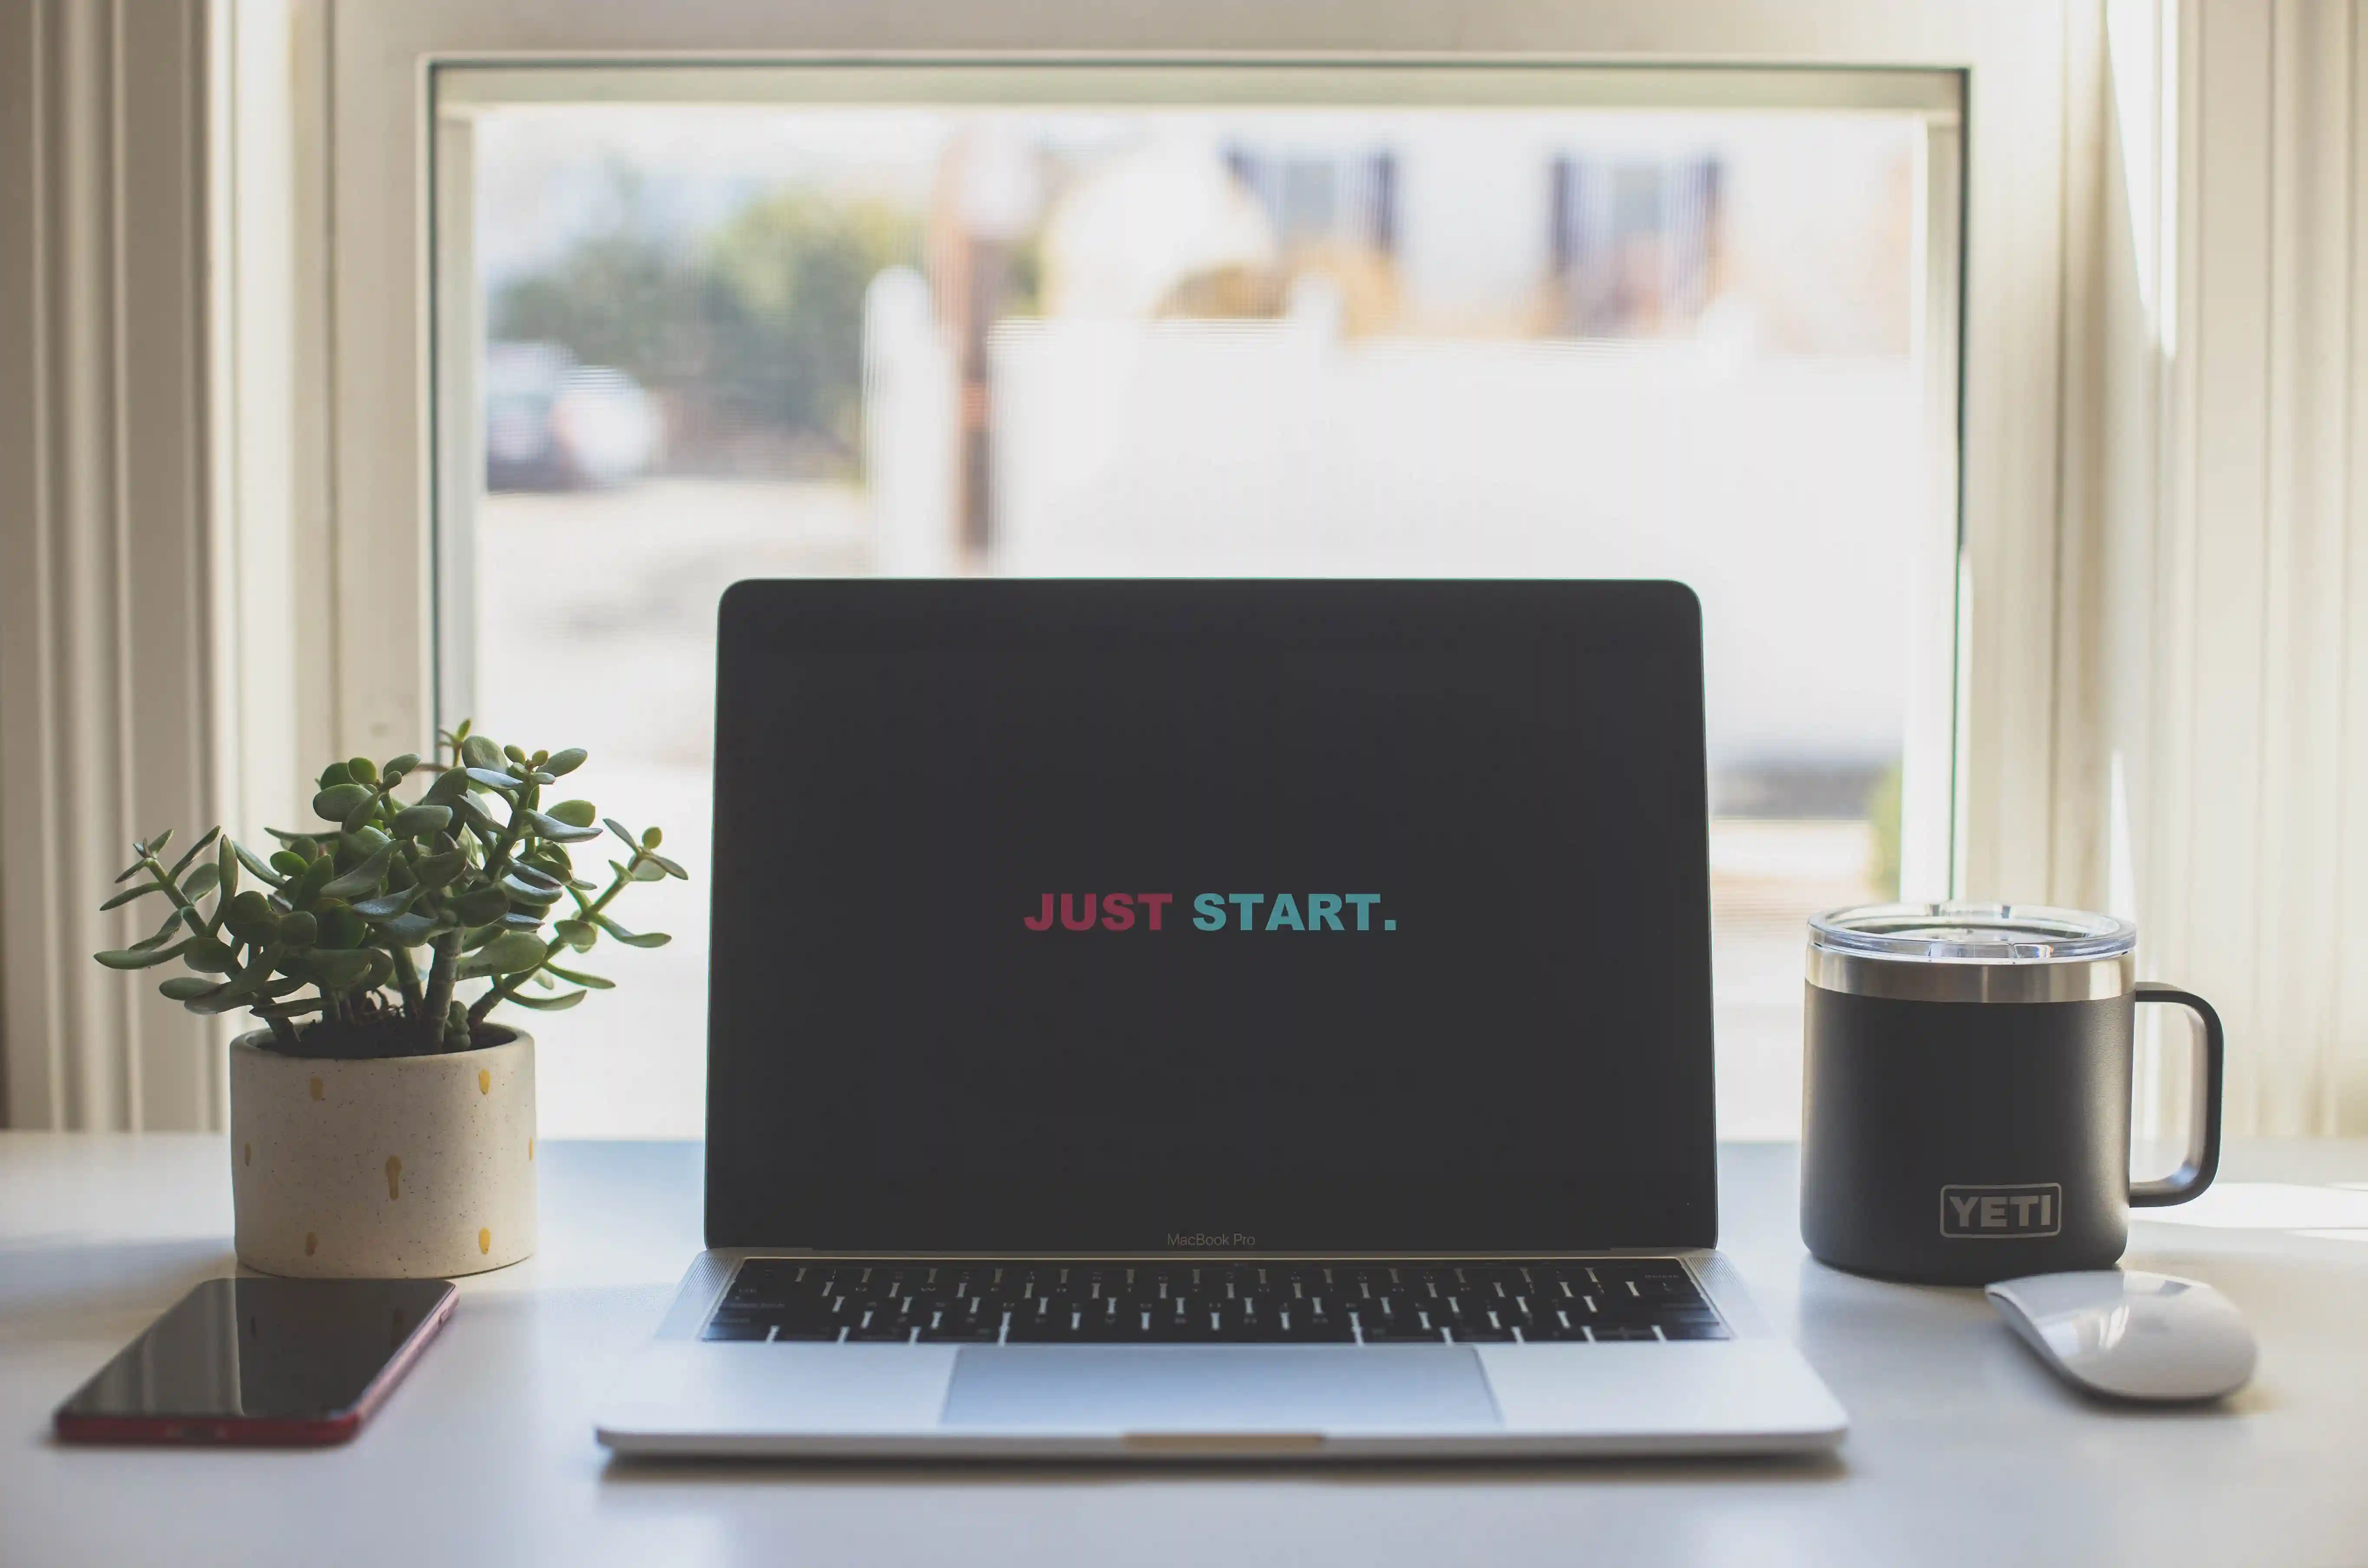 Just start is written on a laptop screen